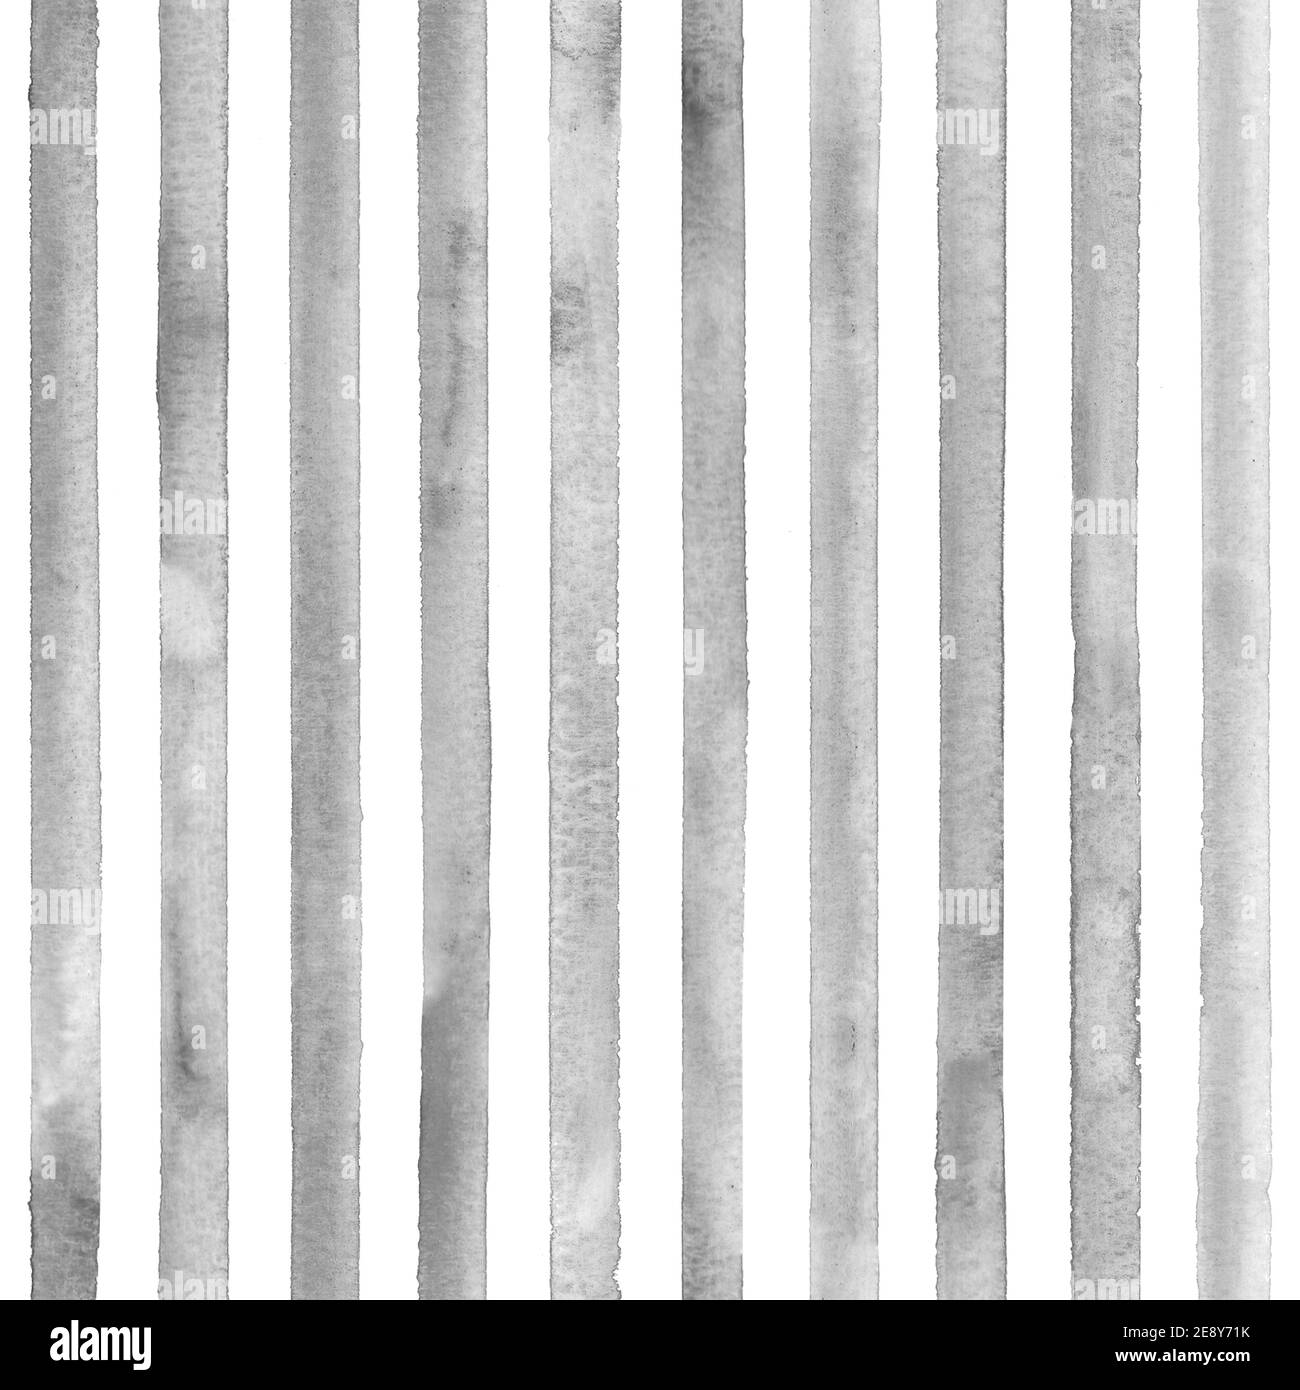 https://c8.alamy.com/comp/2E8Y71K/watercolor-stripe-seamless-pattern-gray-stripes-on-white-background-watercolour-hand-drawn-striped-texture-print-for-cloth-design-textile-fabric-2E8Y71K.jpg